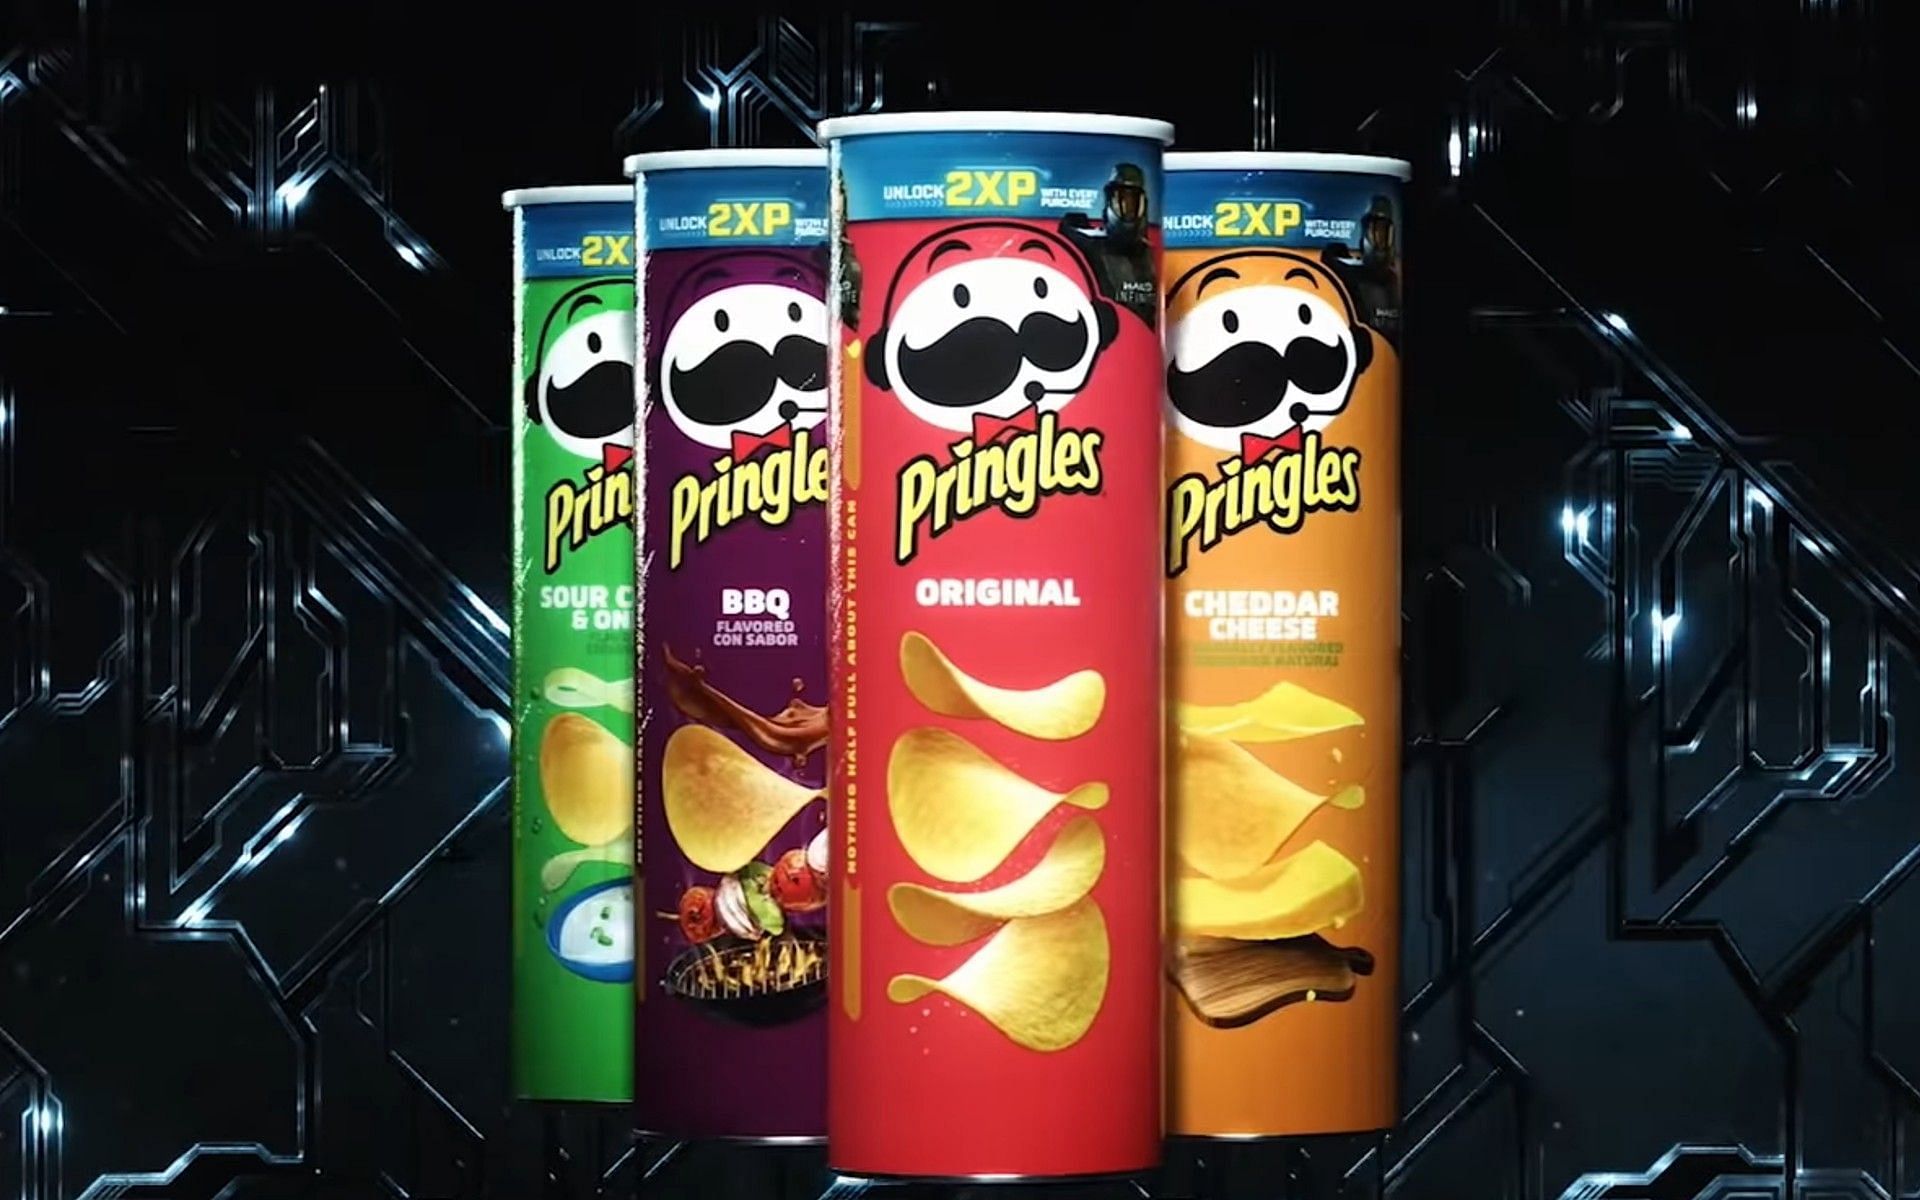 Purchase specially marked Pringles for 2XP. (Image via Pringles)